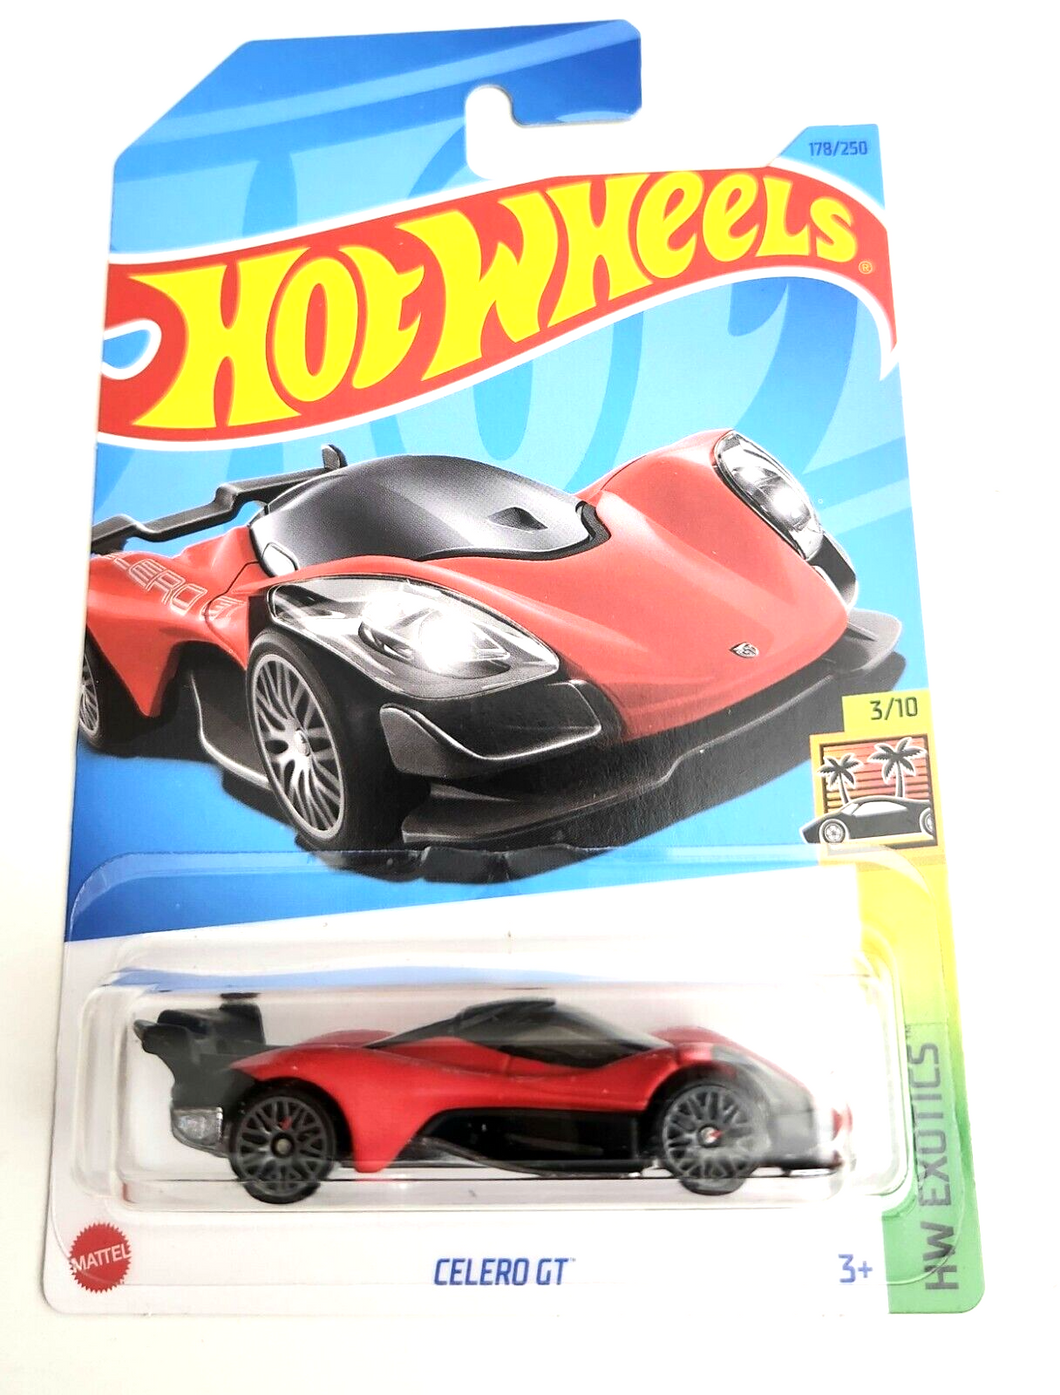 Hot Wheels Celero GT HW Exotics 3/10, 178/250 (Red)